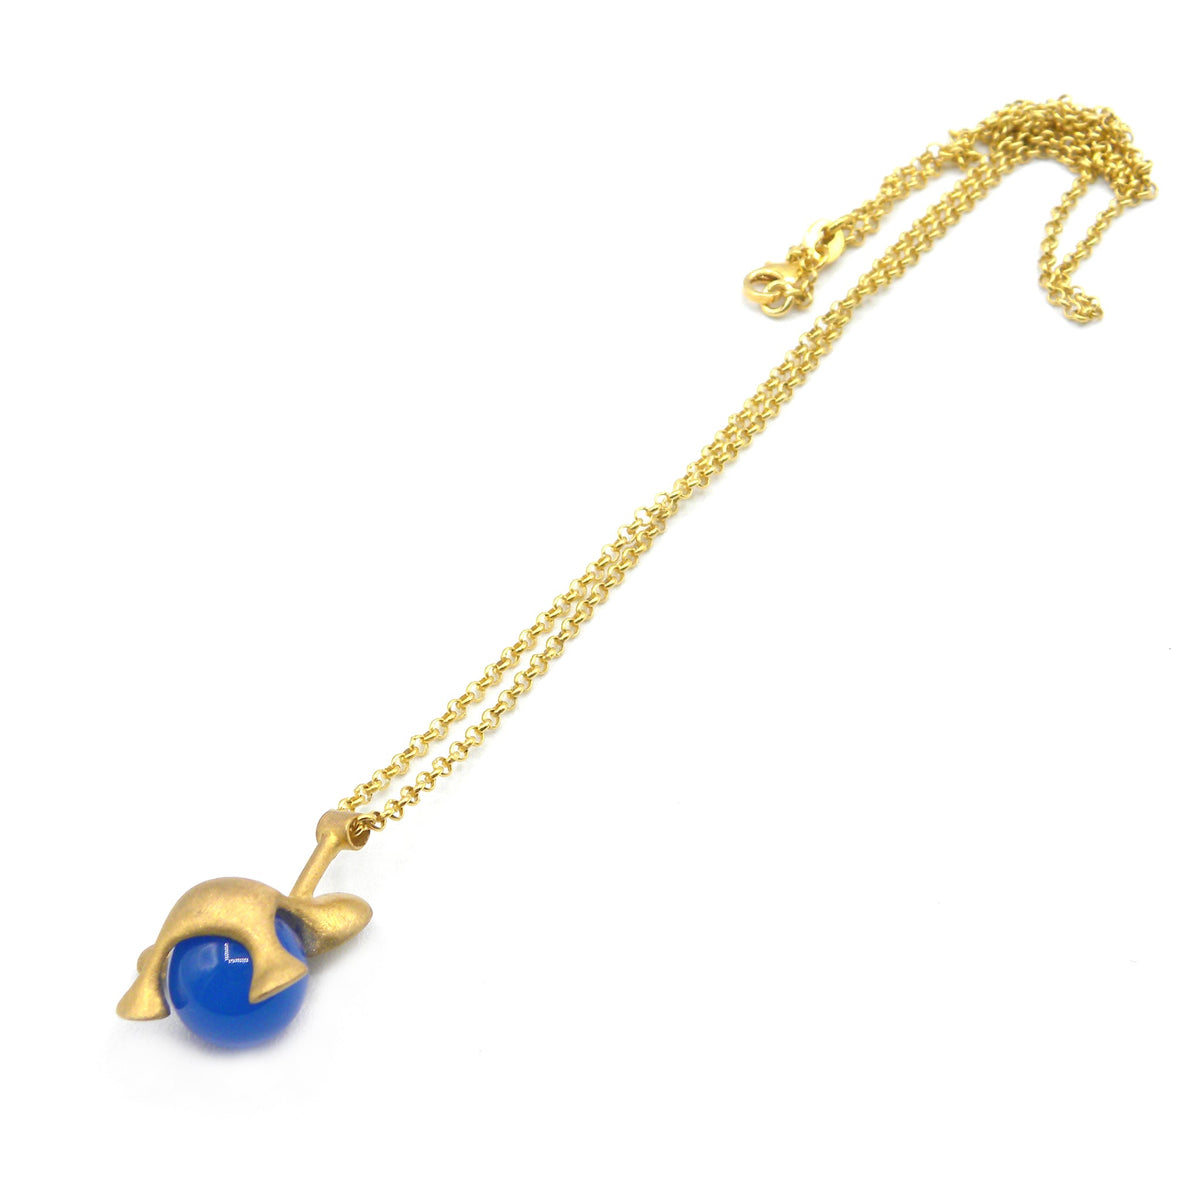 Snorky agate blue bronze pendant